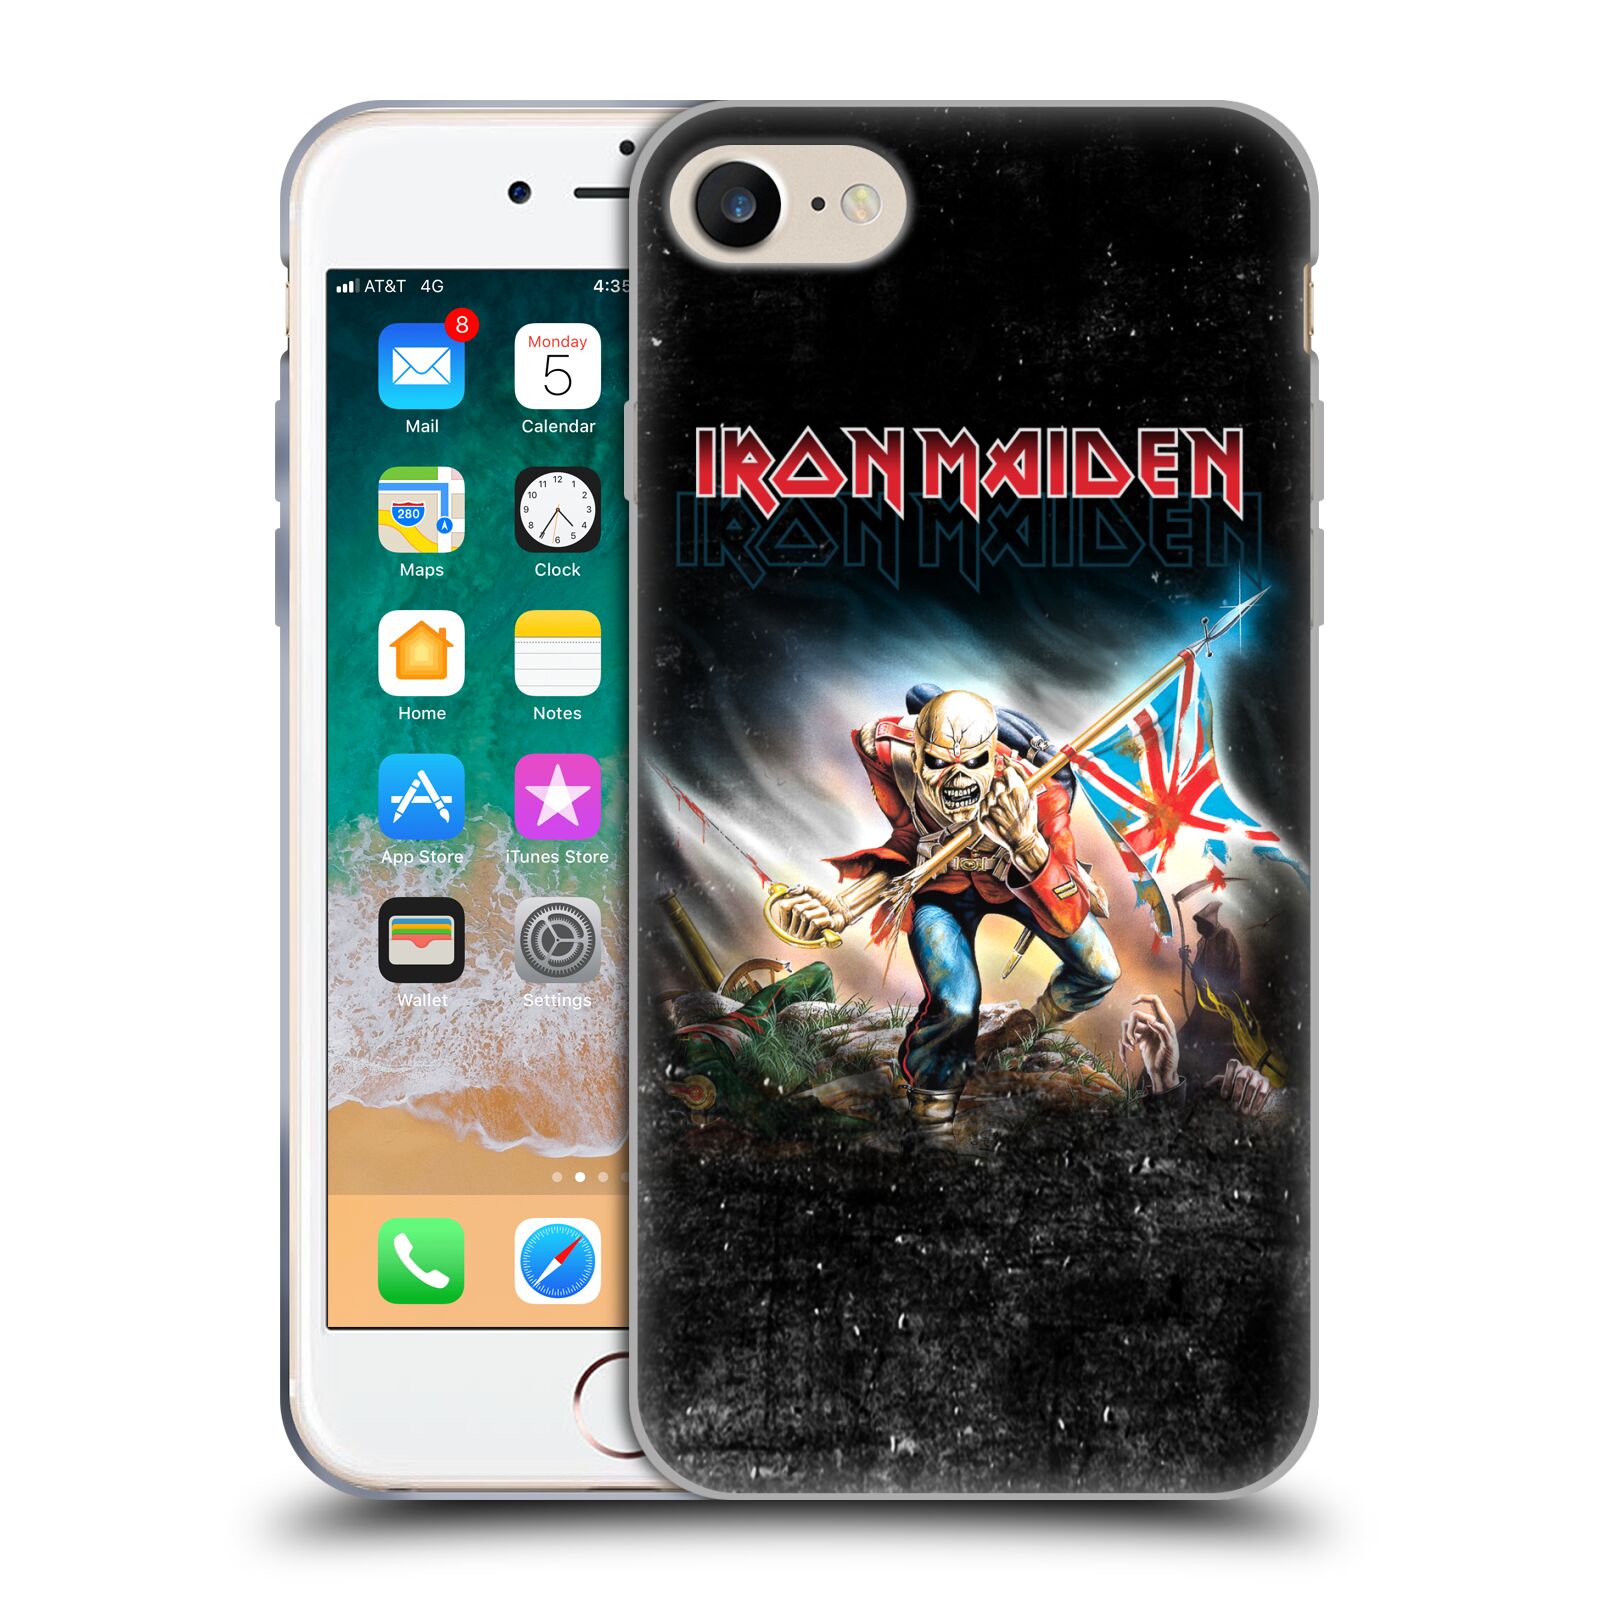 Silikonové pouzdro na mobil Apple iPhone SE 2022 / SE 2020 - Head Case - Iron Maiden - Trooper 2016 (Silikonový kryt, obal, pouzdro na mobilní telefon Apple iPhone SE 2020 / Apple iPhone SE 2022 s motivem Iron Maiden - Trooper 2016)